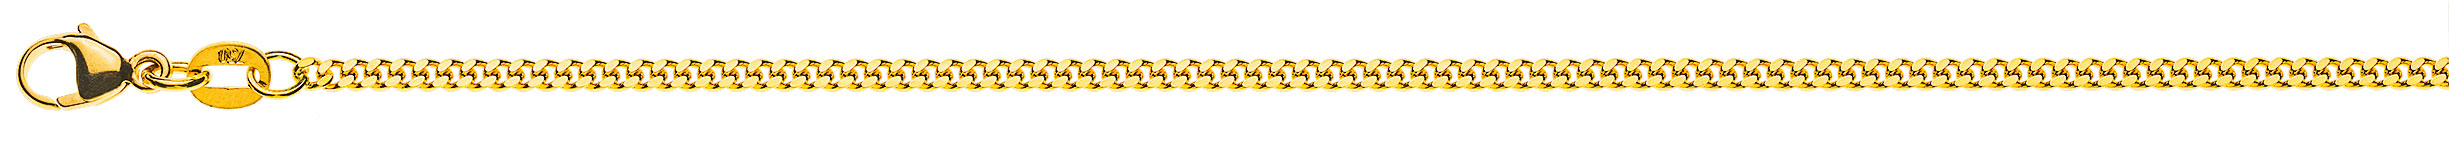 AURONOS Prestige Necklace yellow gold 18K curb chain polished 42cm 2.0mm